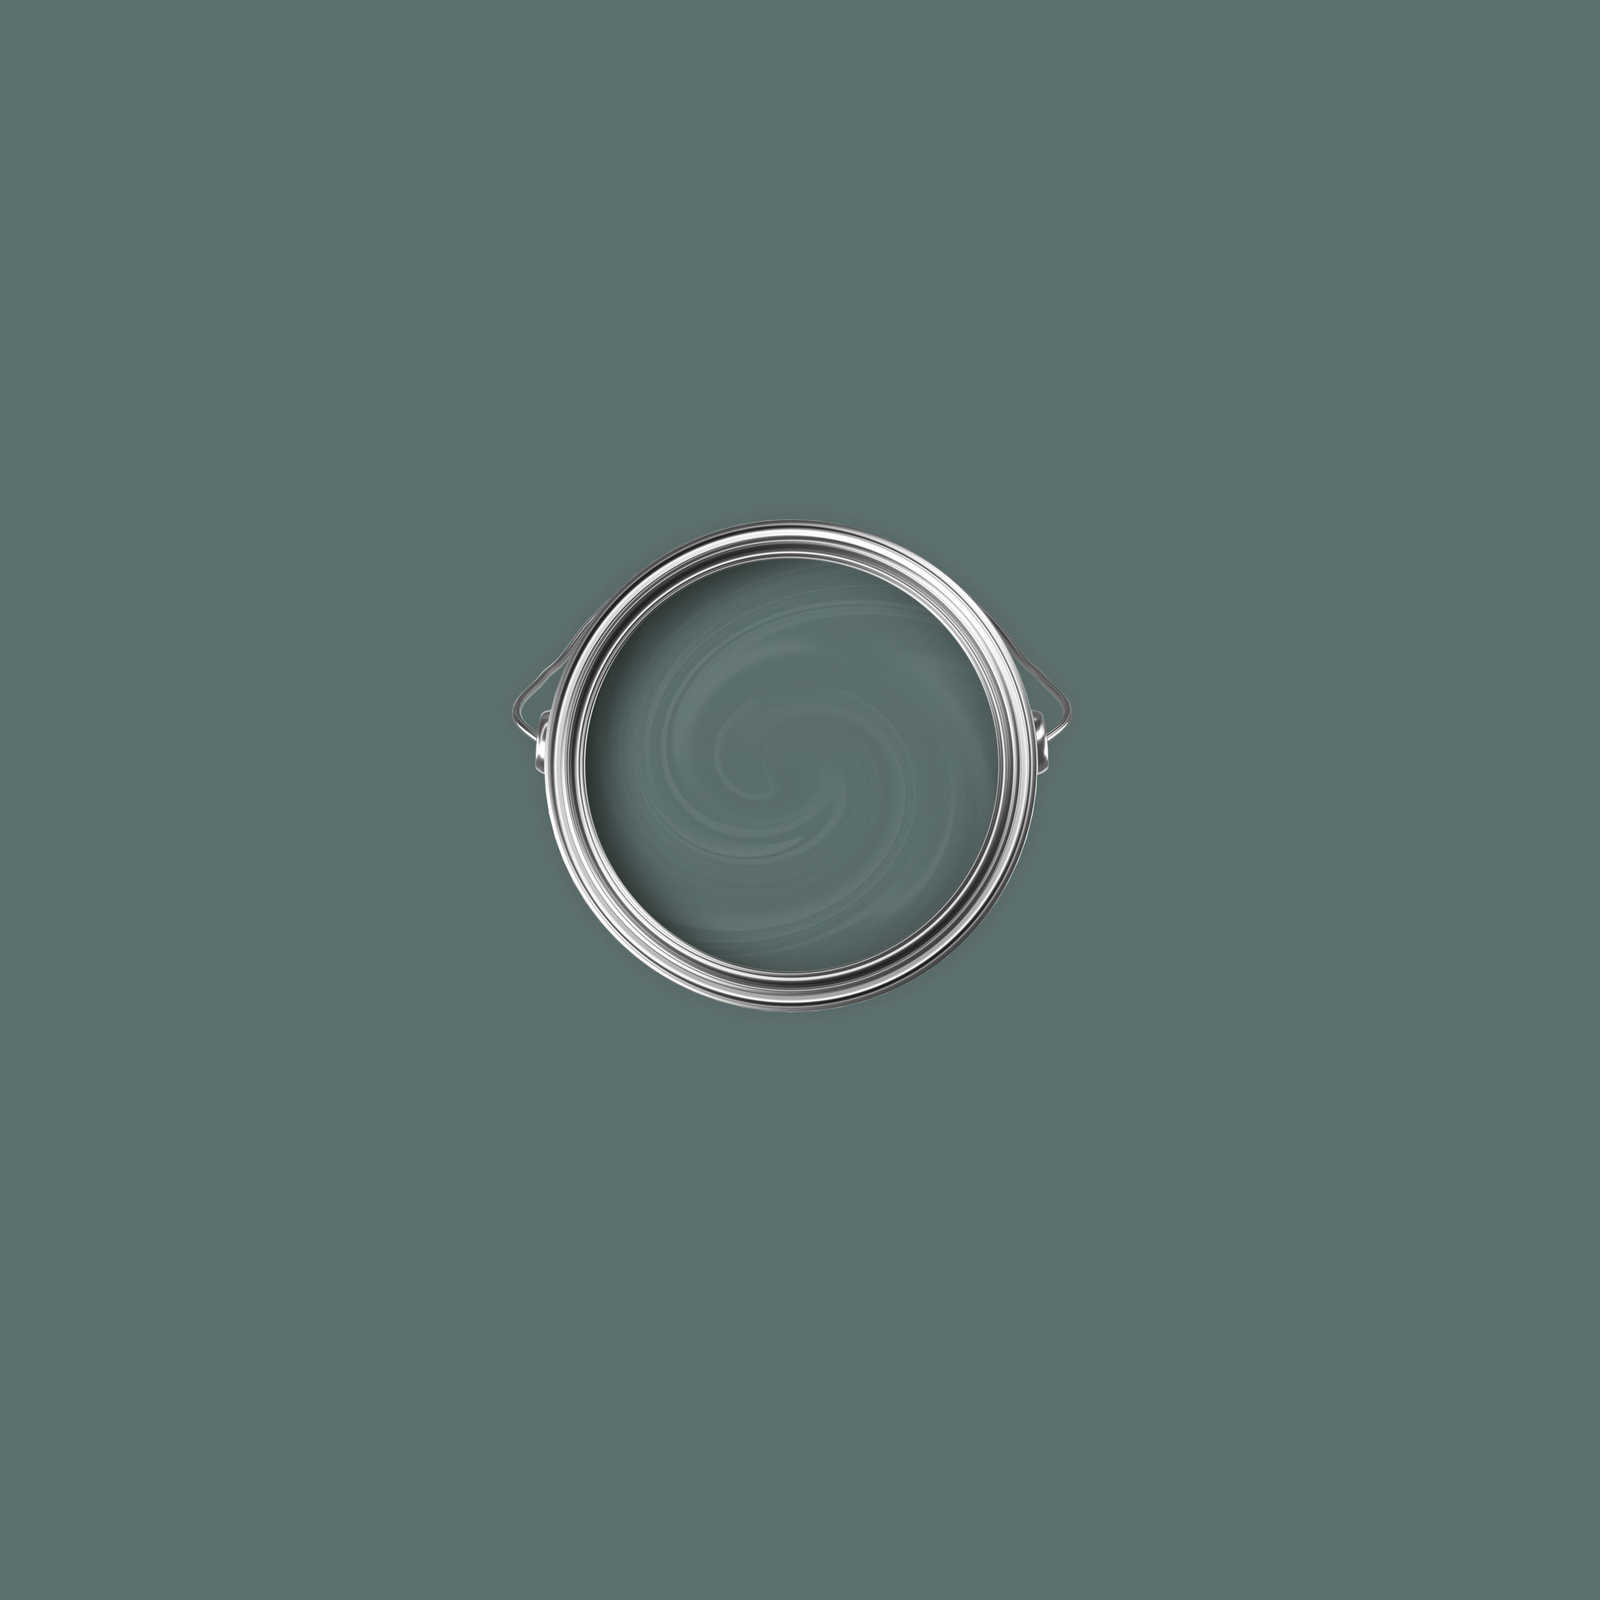             Premium Wandfarbe entspannendes Grau Grün »Sweet Sage« NW405 – 1 Liter
        